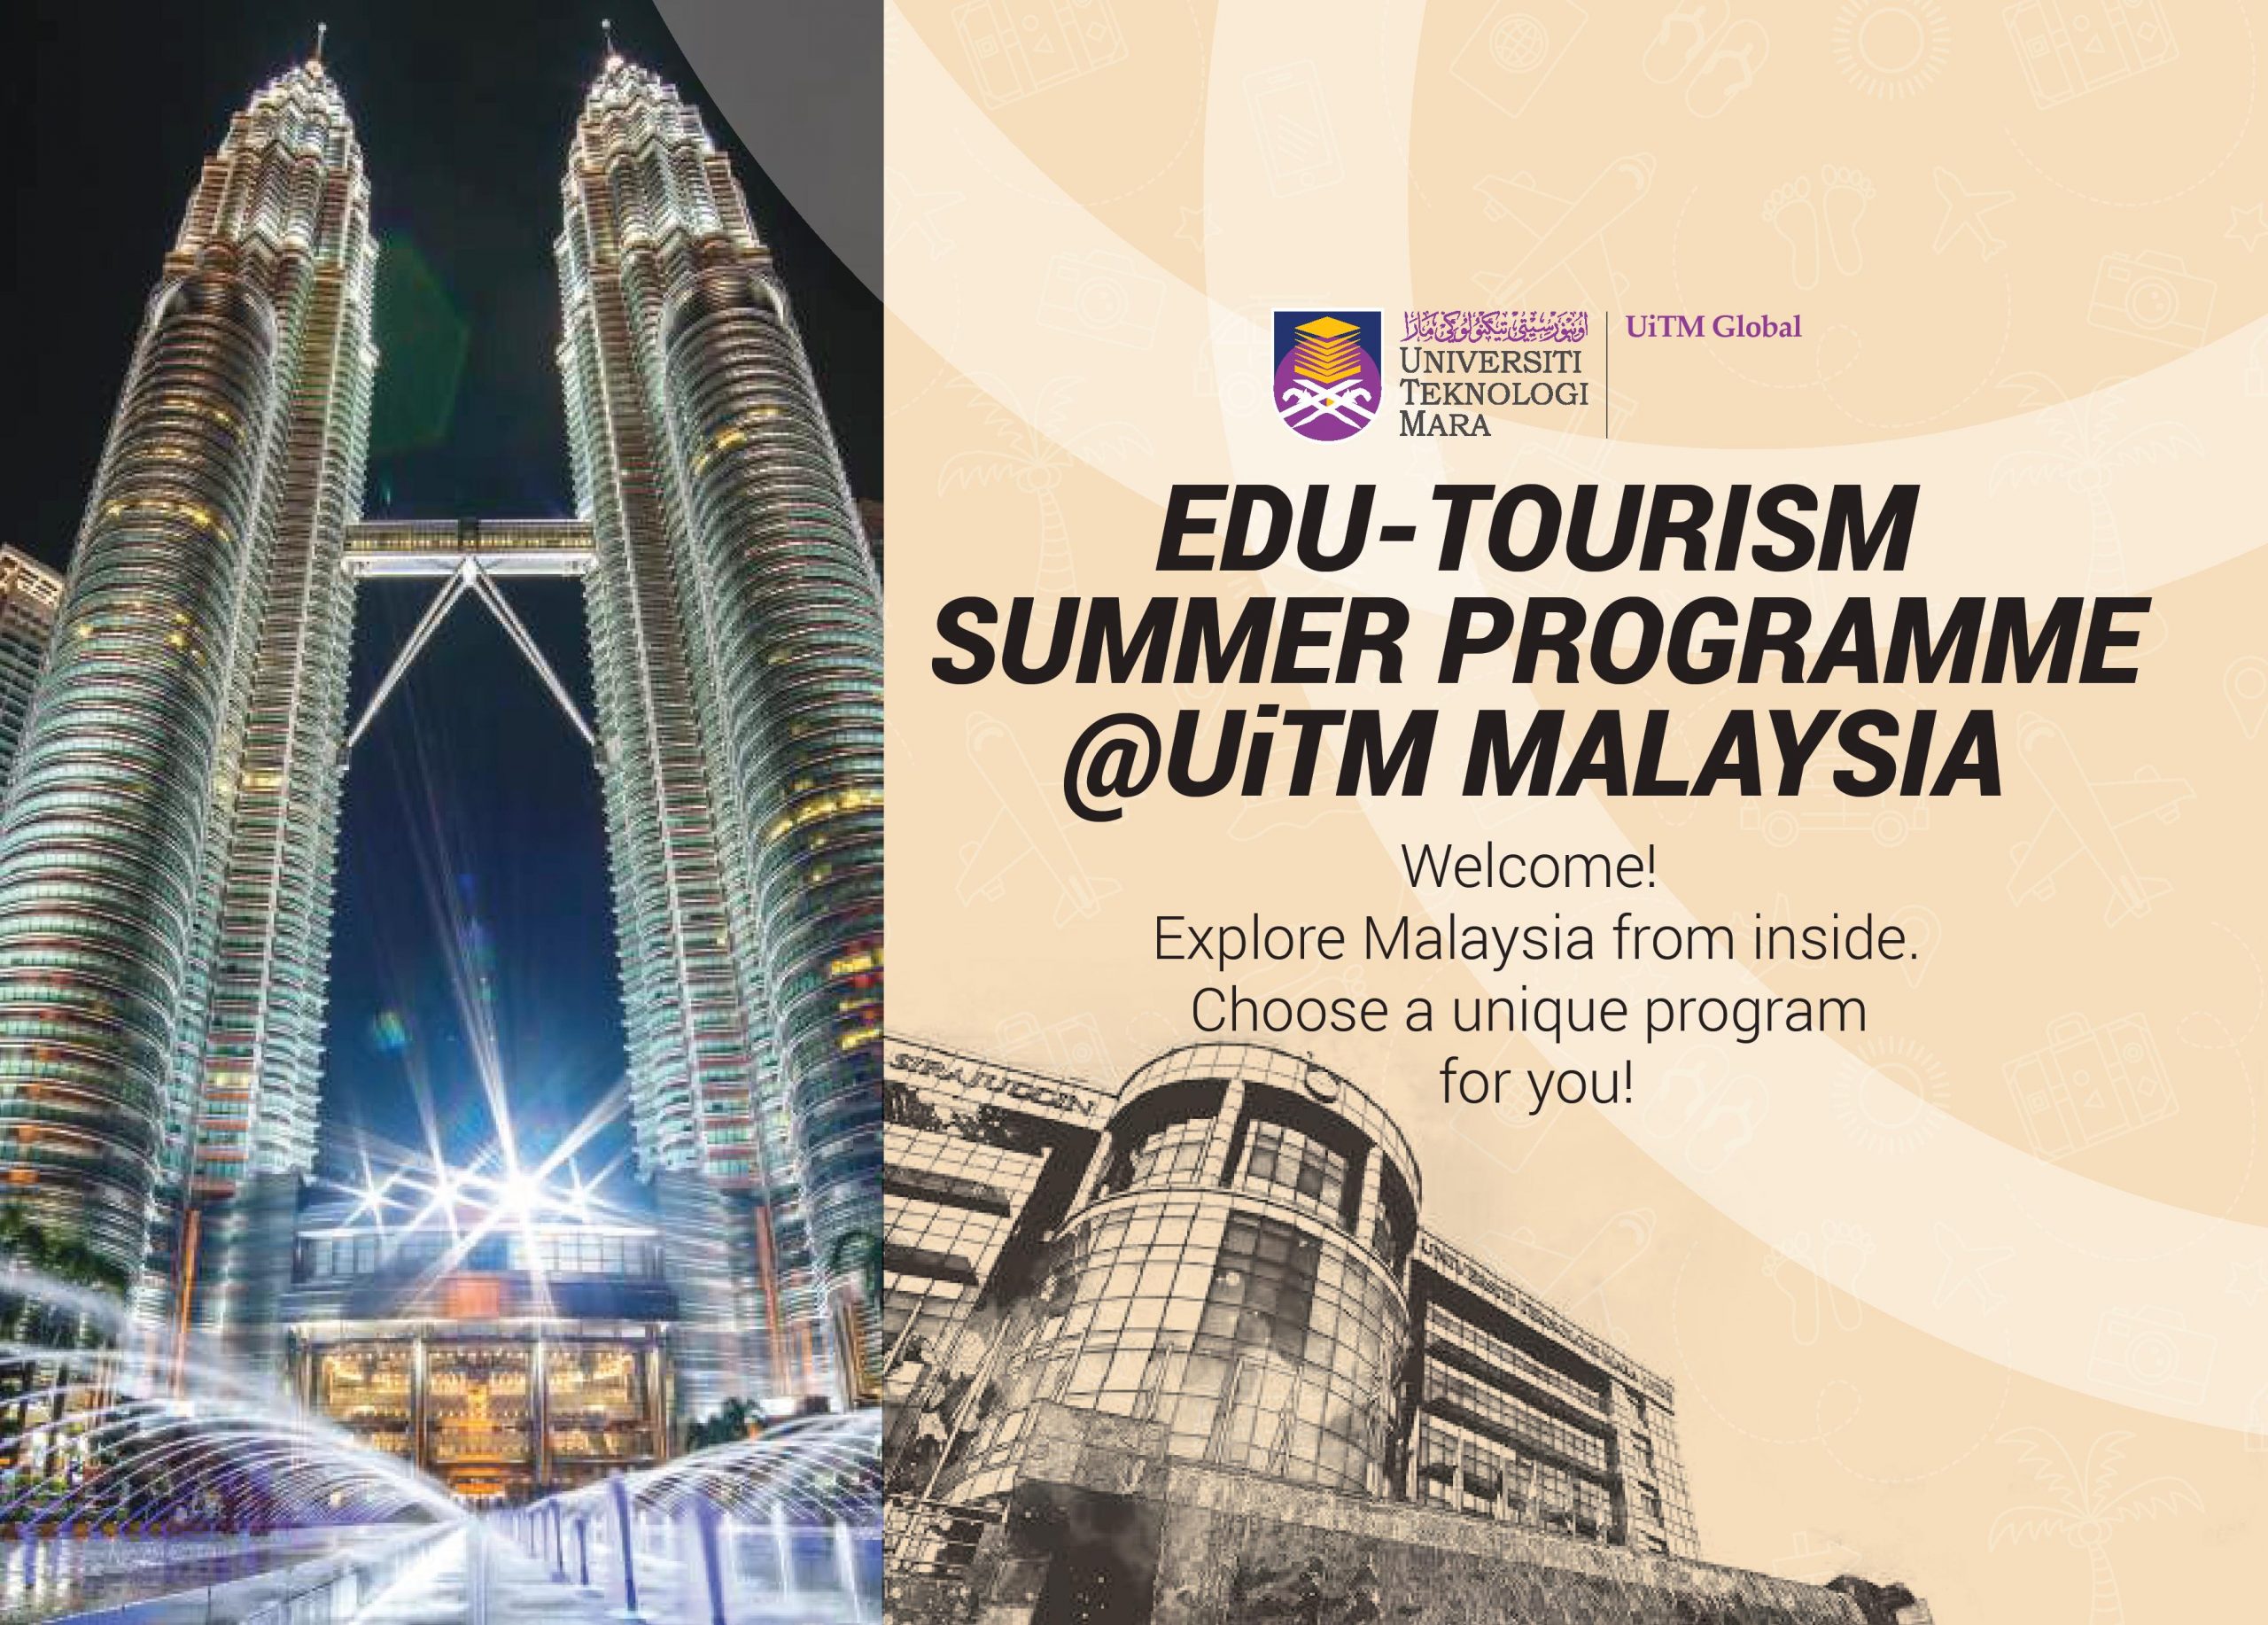 Edu-Tourism Summer Programme@UiTM Malaysia 2021